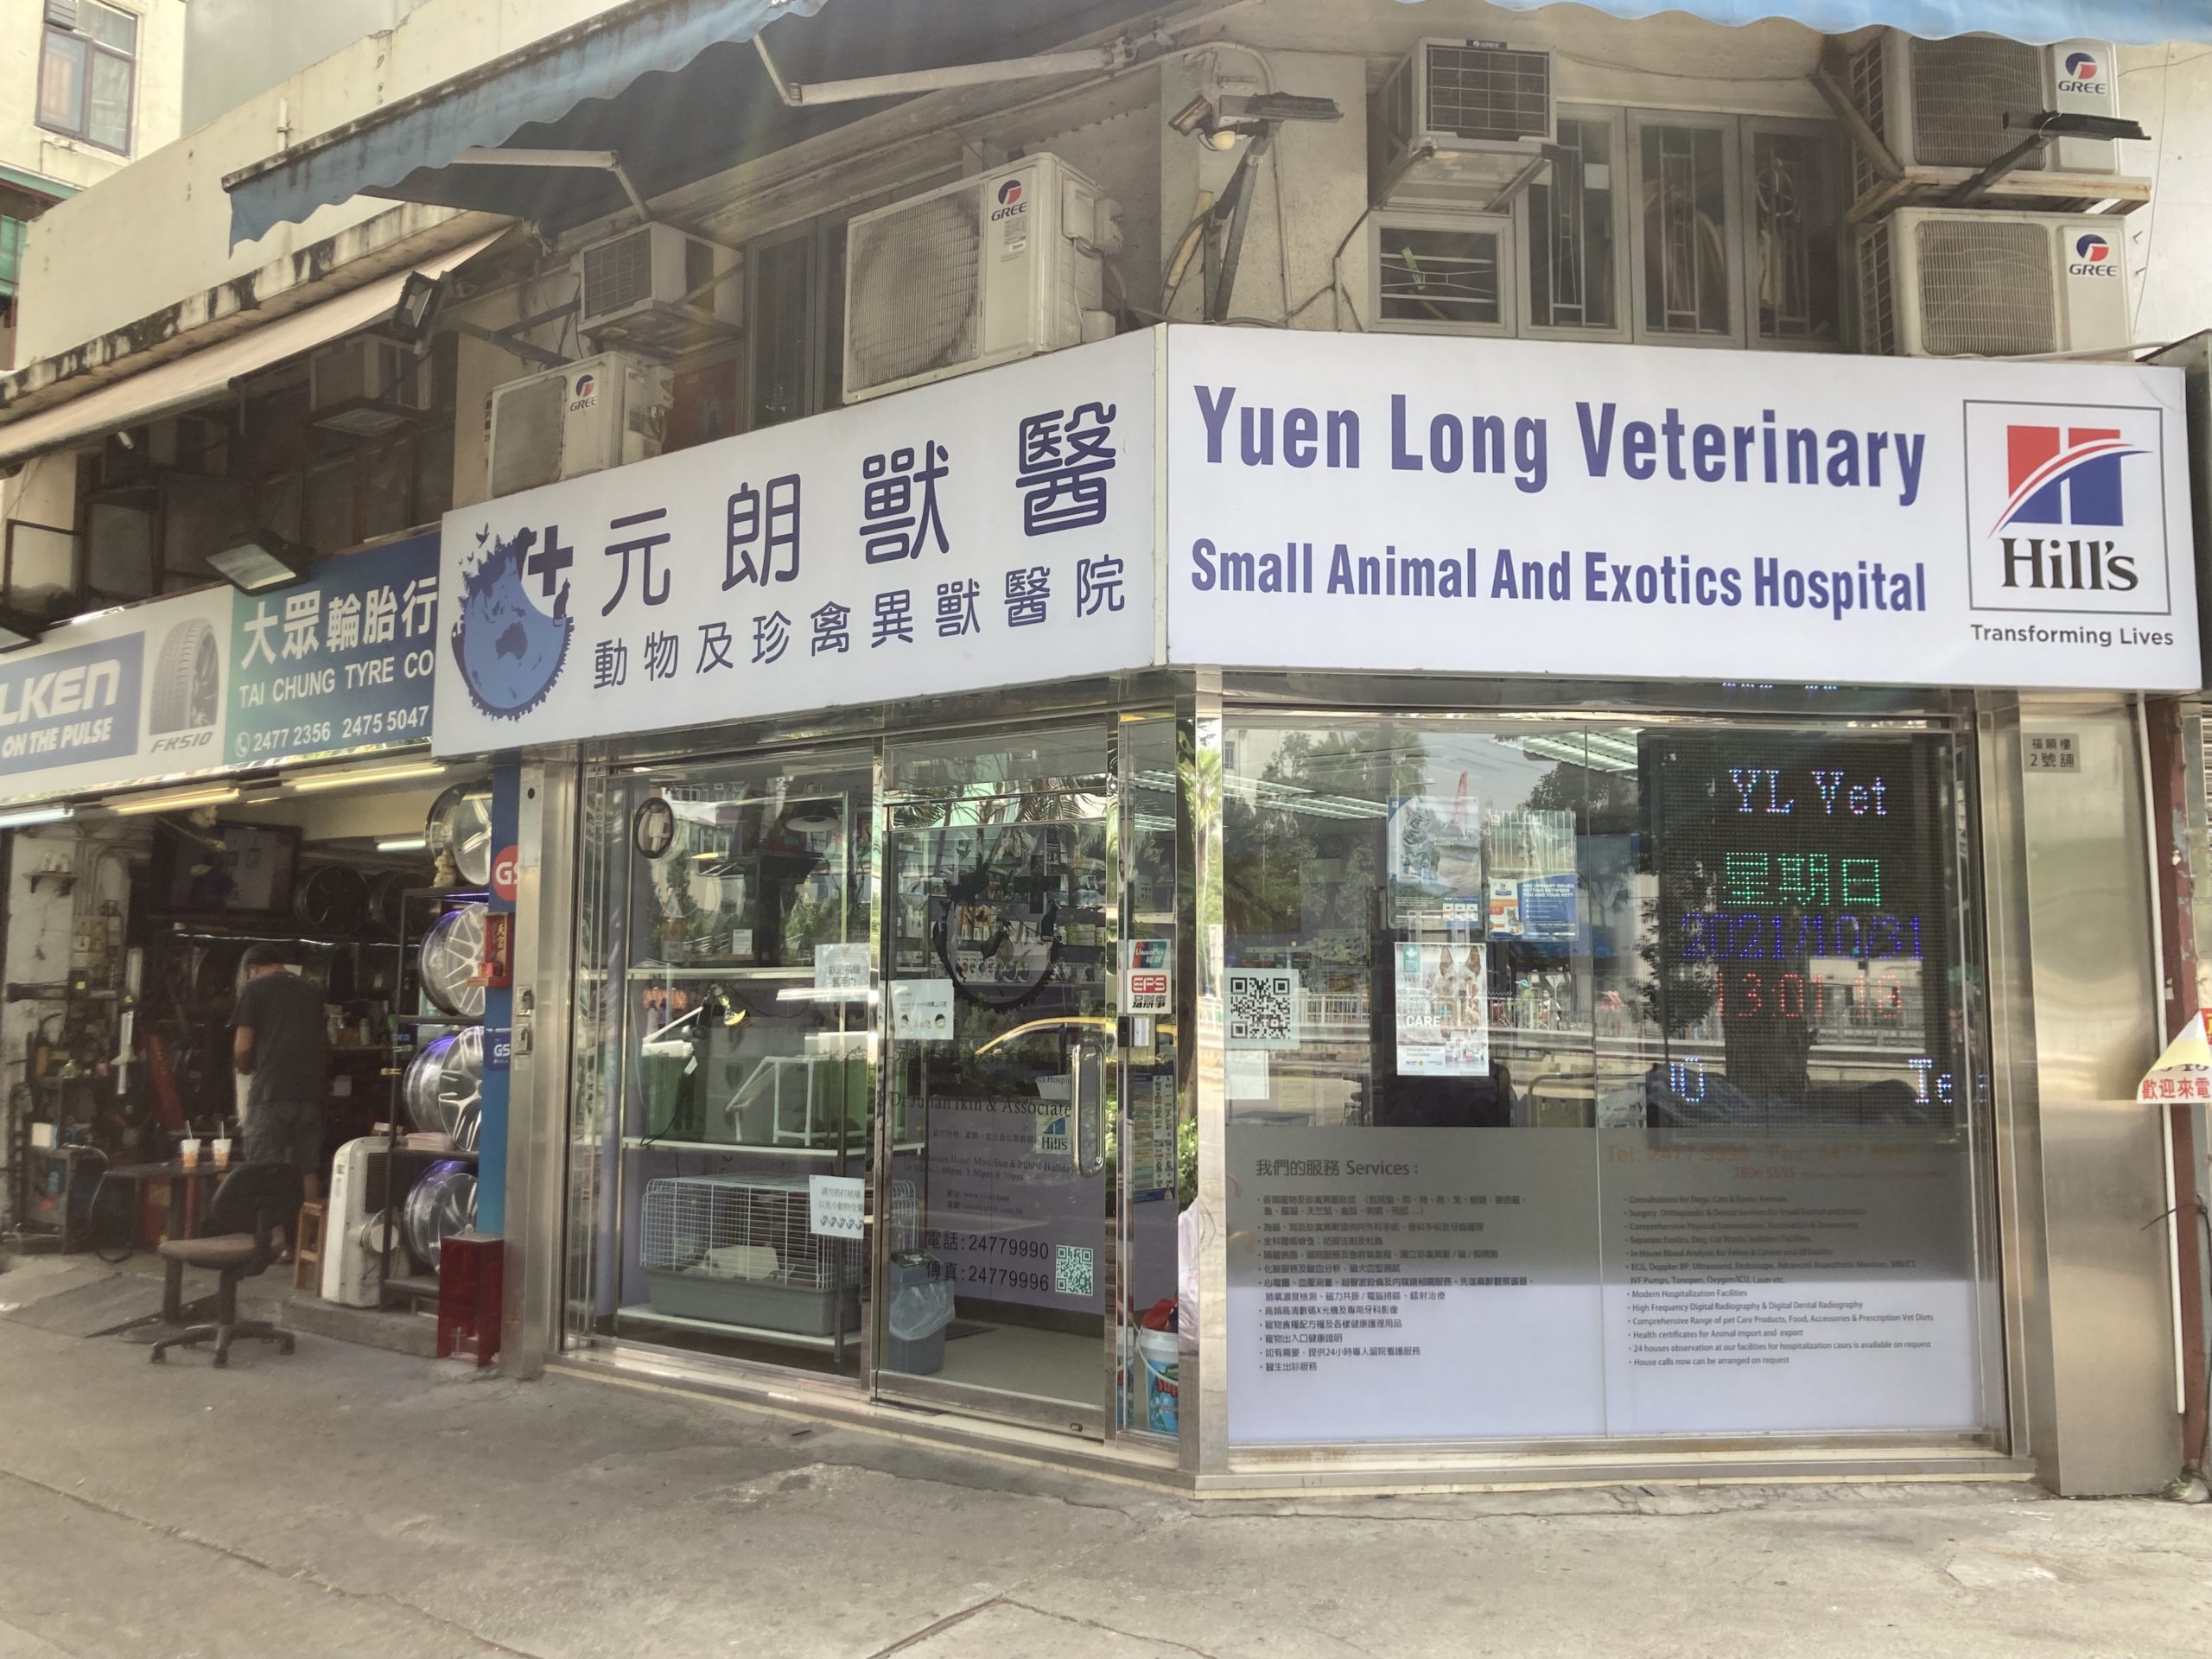 Yuen Long Veterrinaty Small Animal And Exotics Hospital 元朗獸醫動物及珍禽異獸醫院